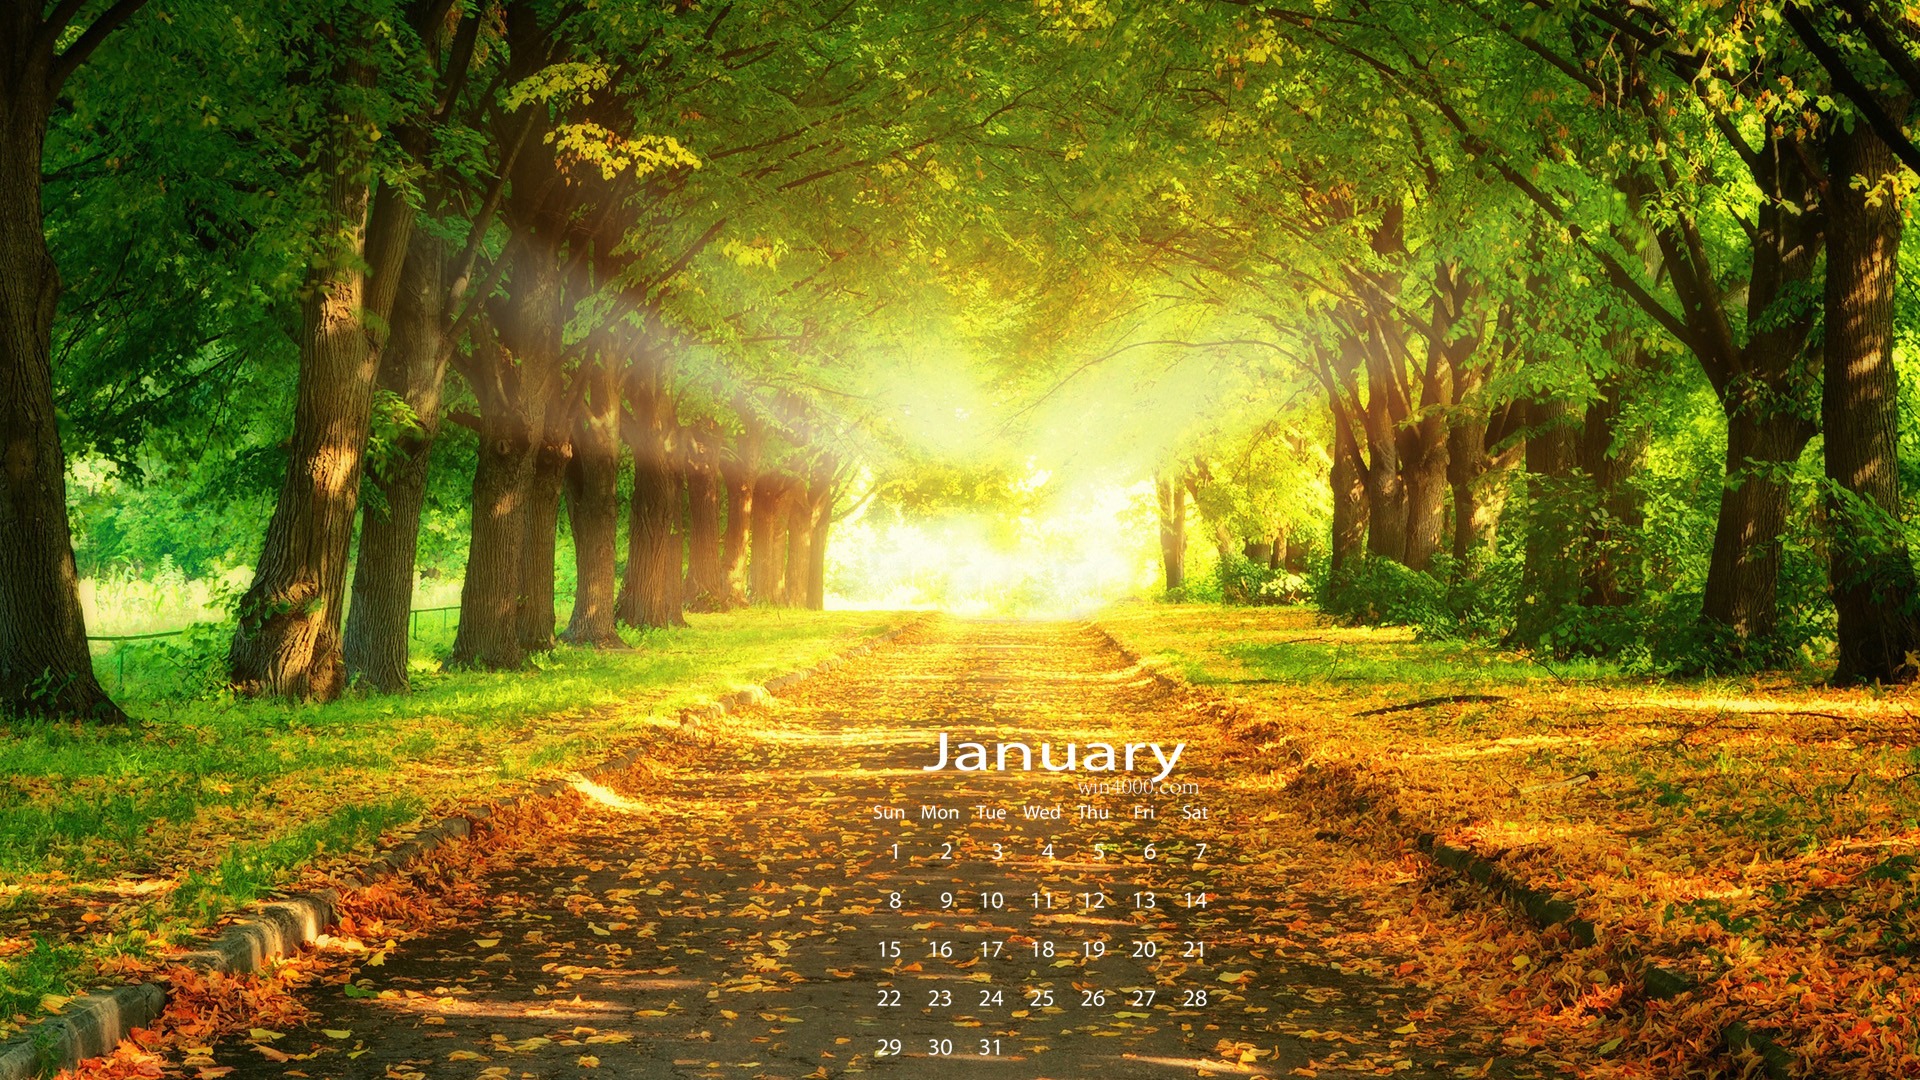 January 2017 calendar wallpaper (1) #2 - 1920x1080